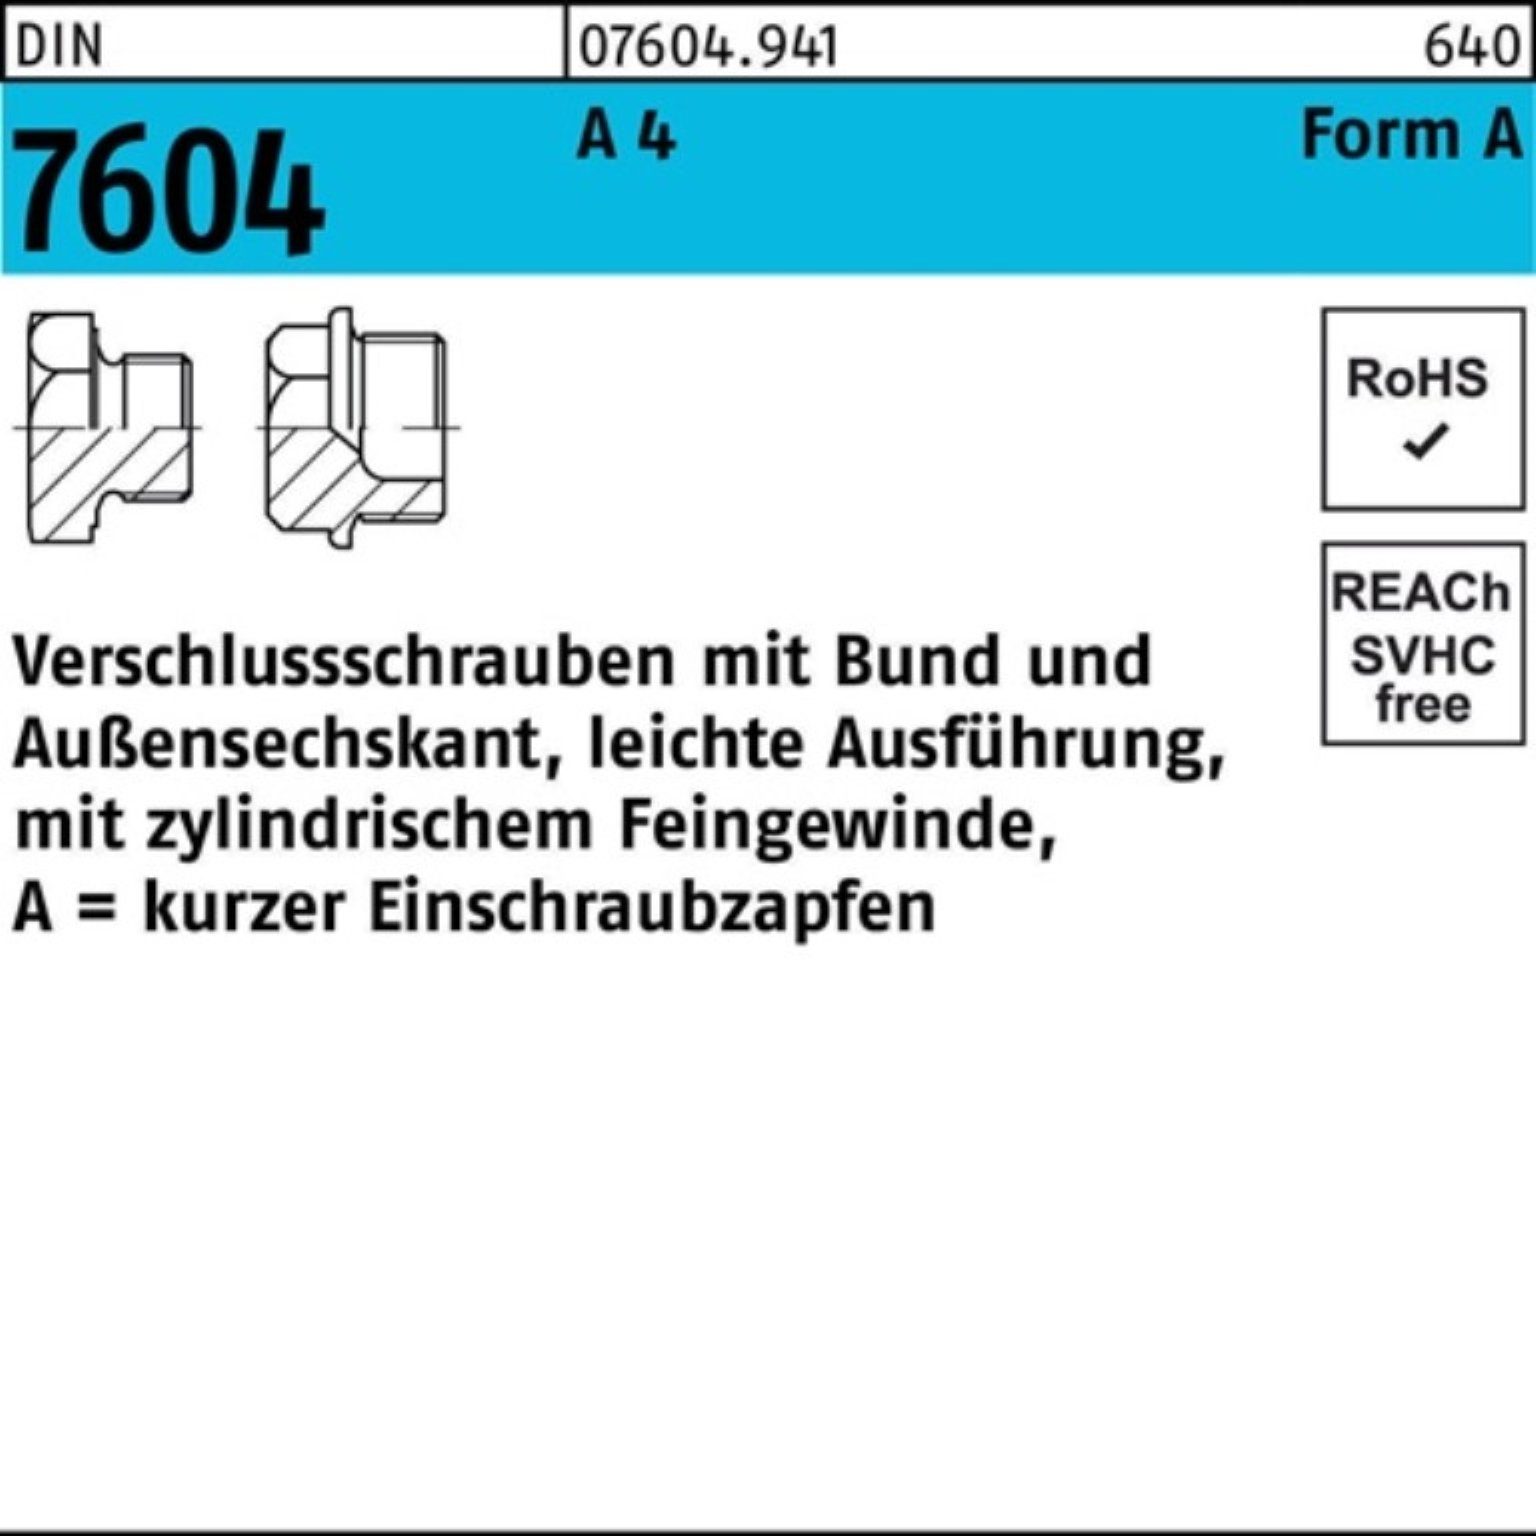 Reyher Schraube 100er Pack Verschlußschraube DIN 7604 Bund AM 22x 1,5 A 4 1 Stück DI